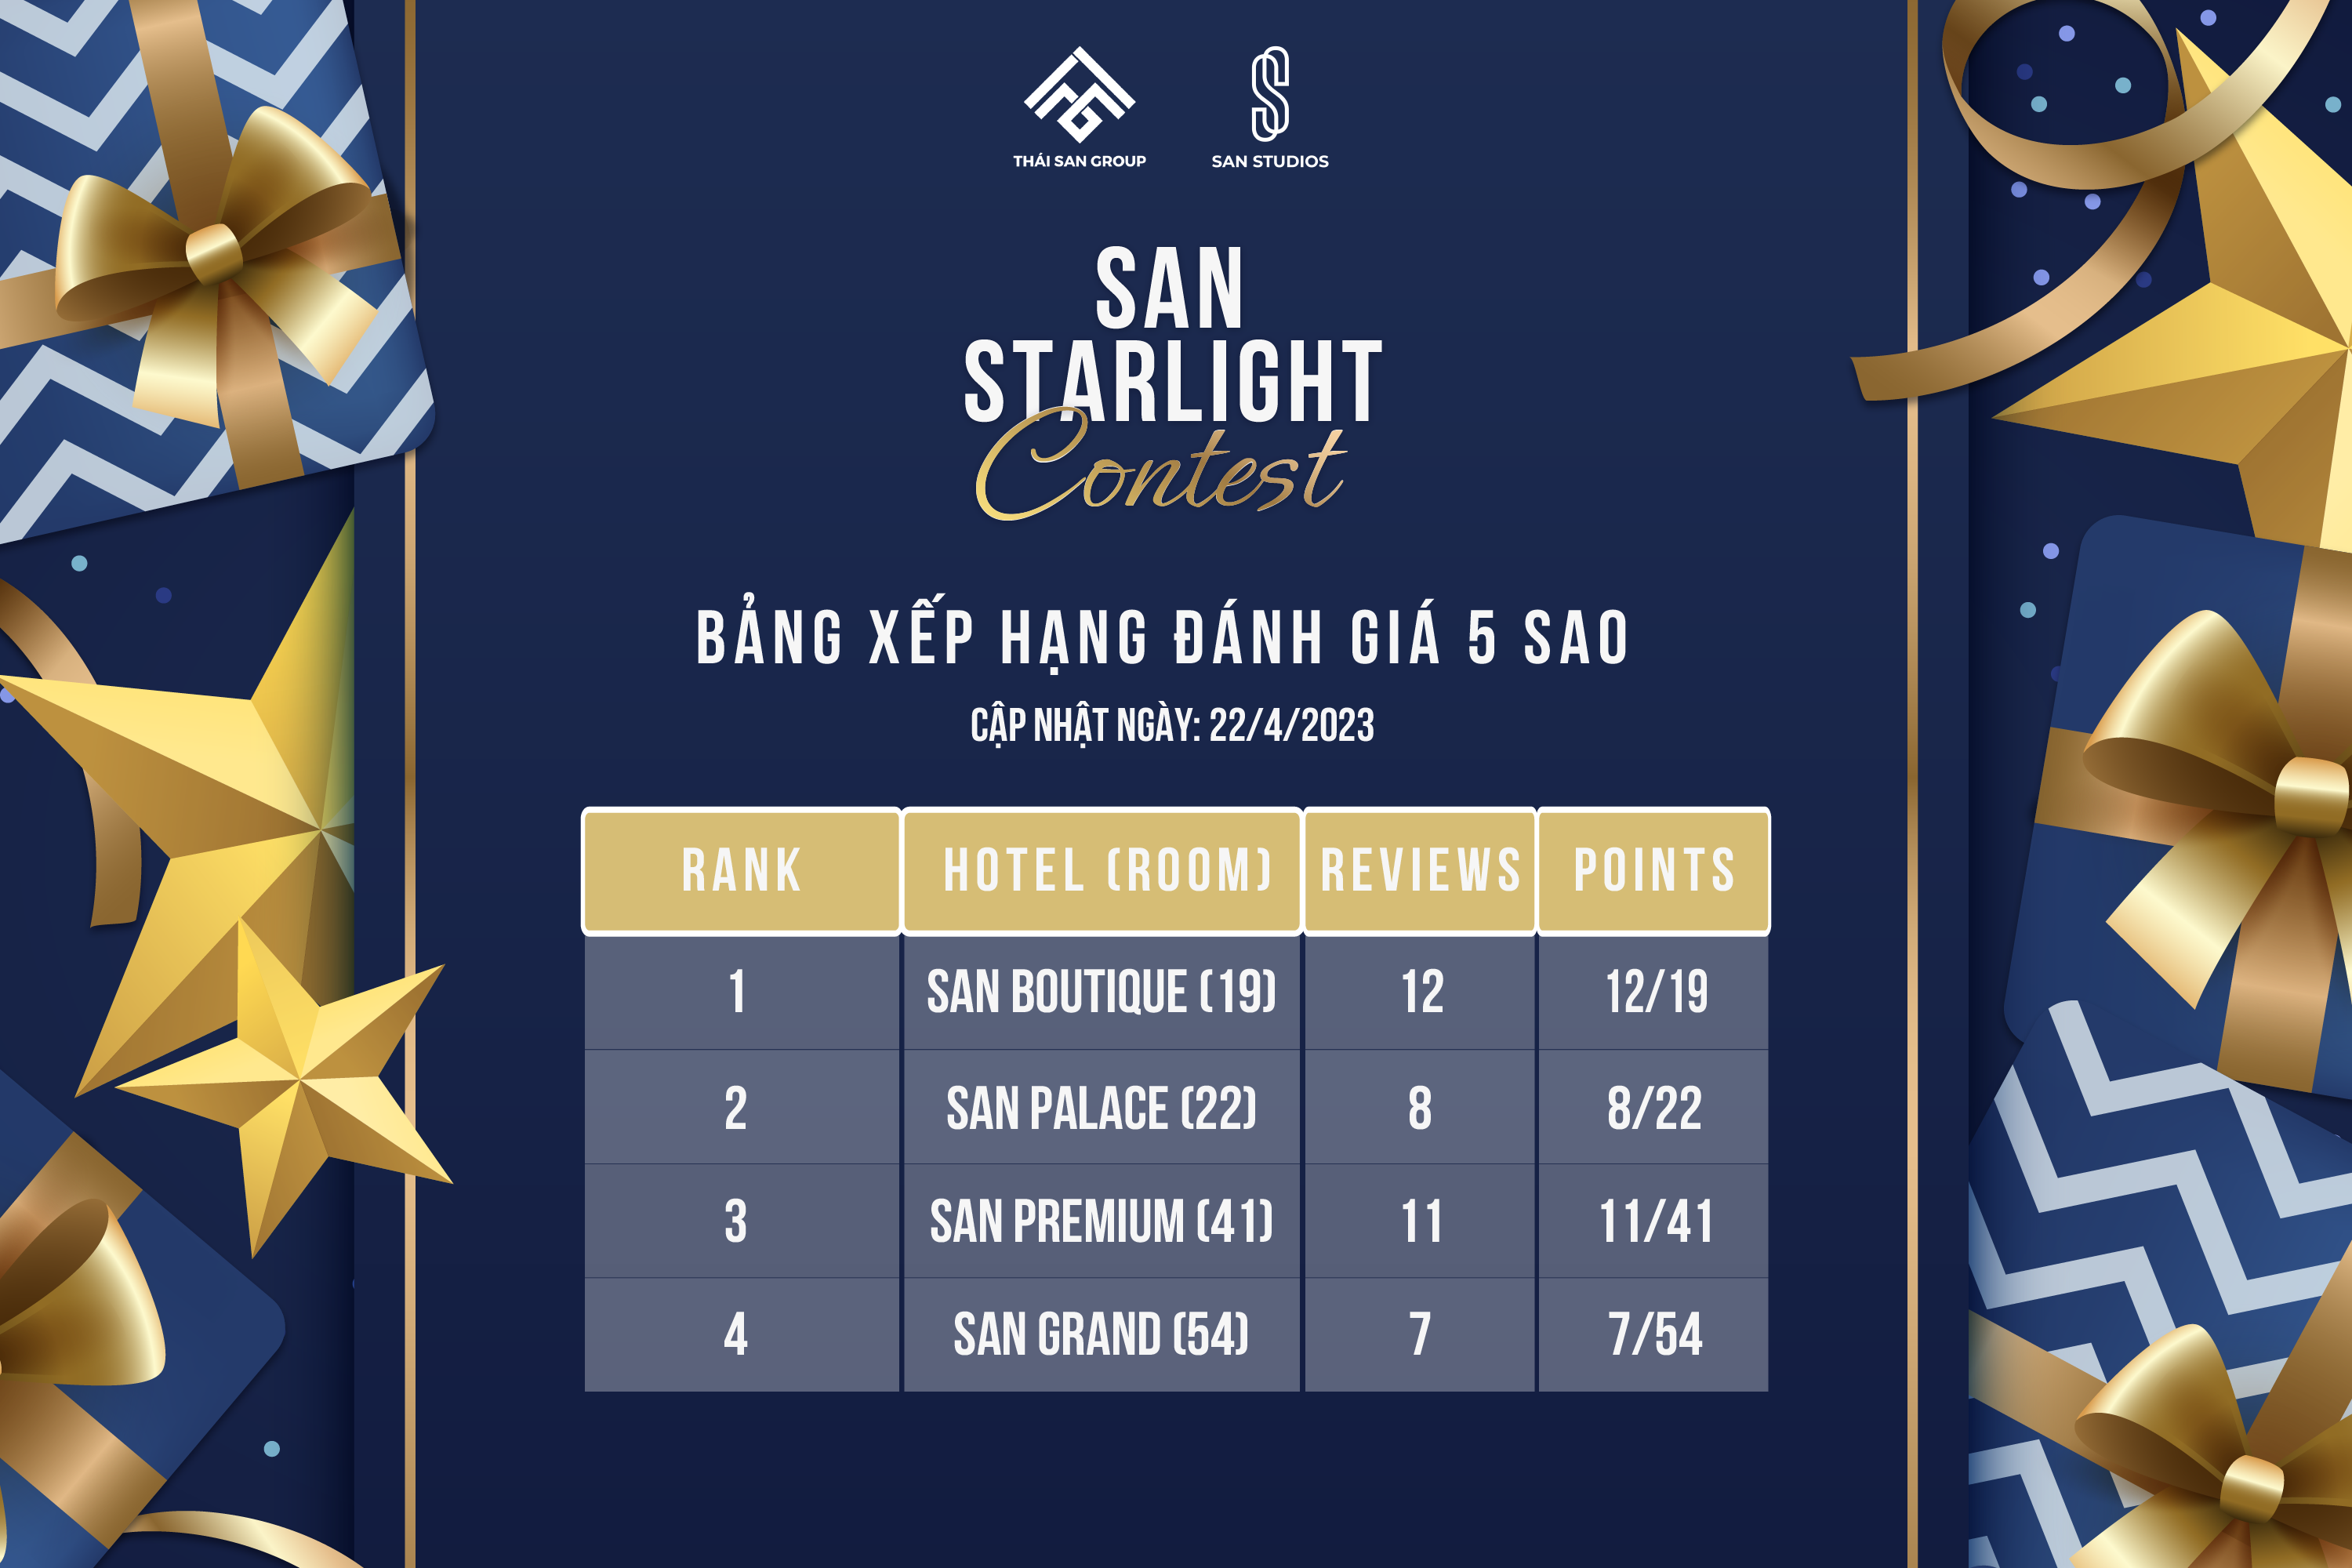 san starlight contest of San hotel series 22/04/2023